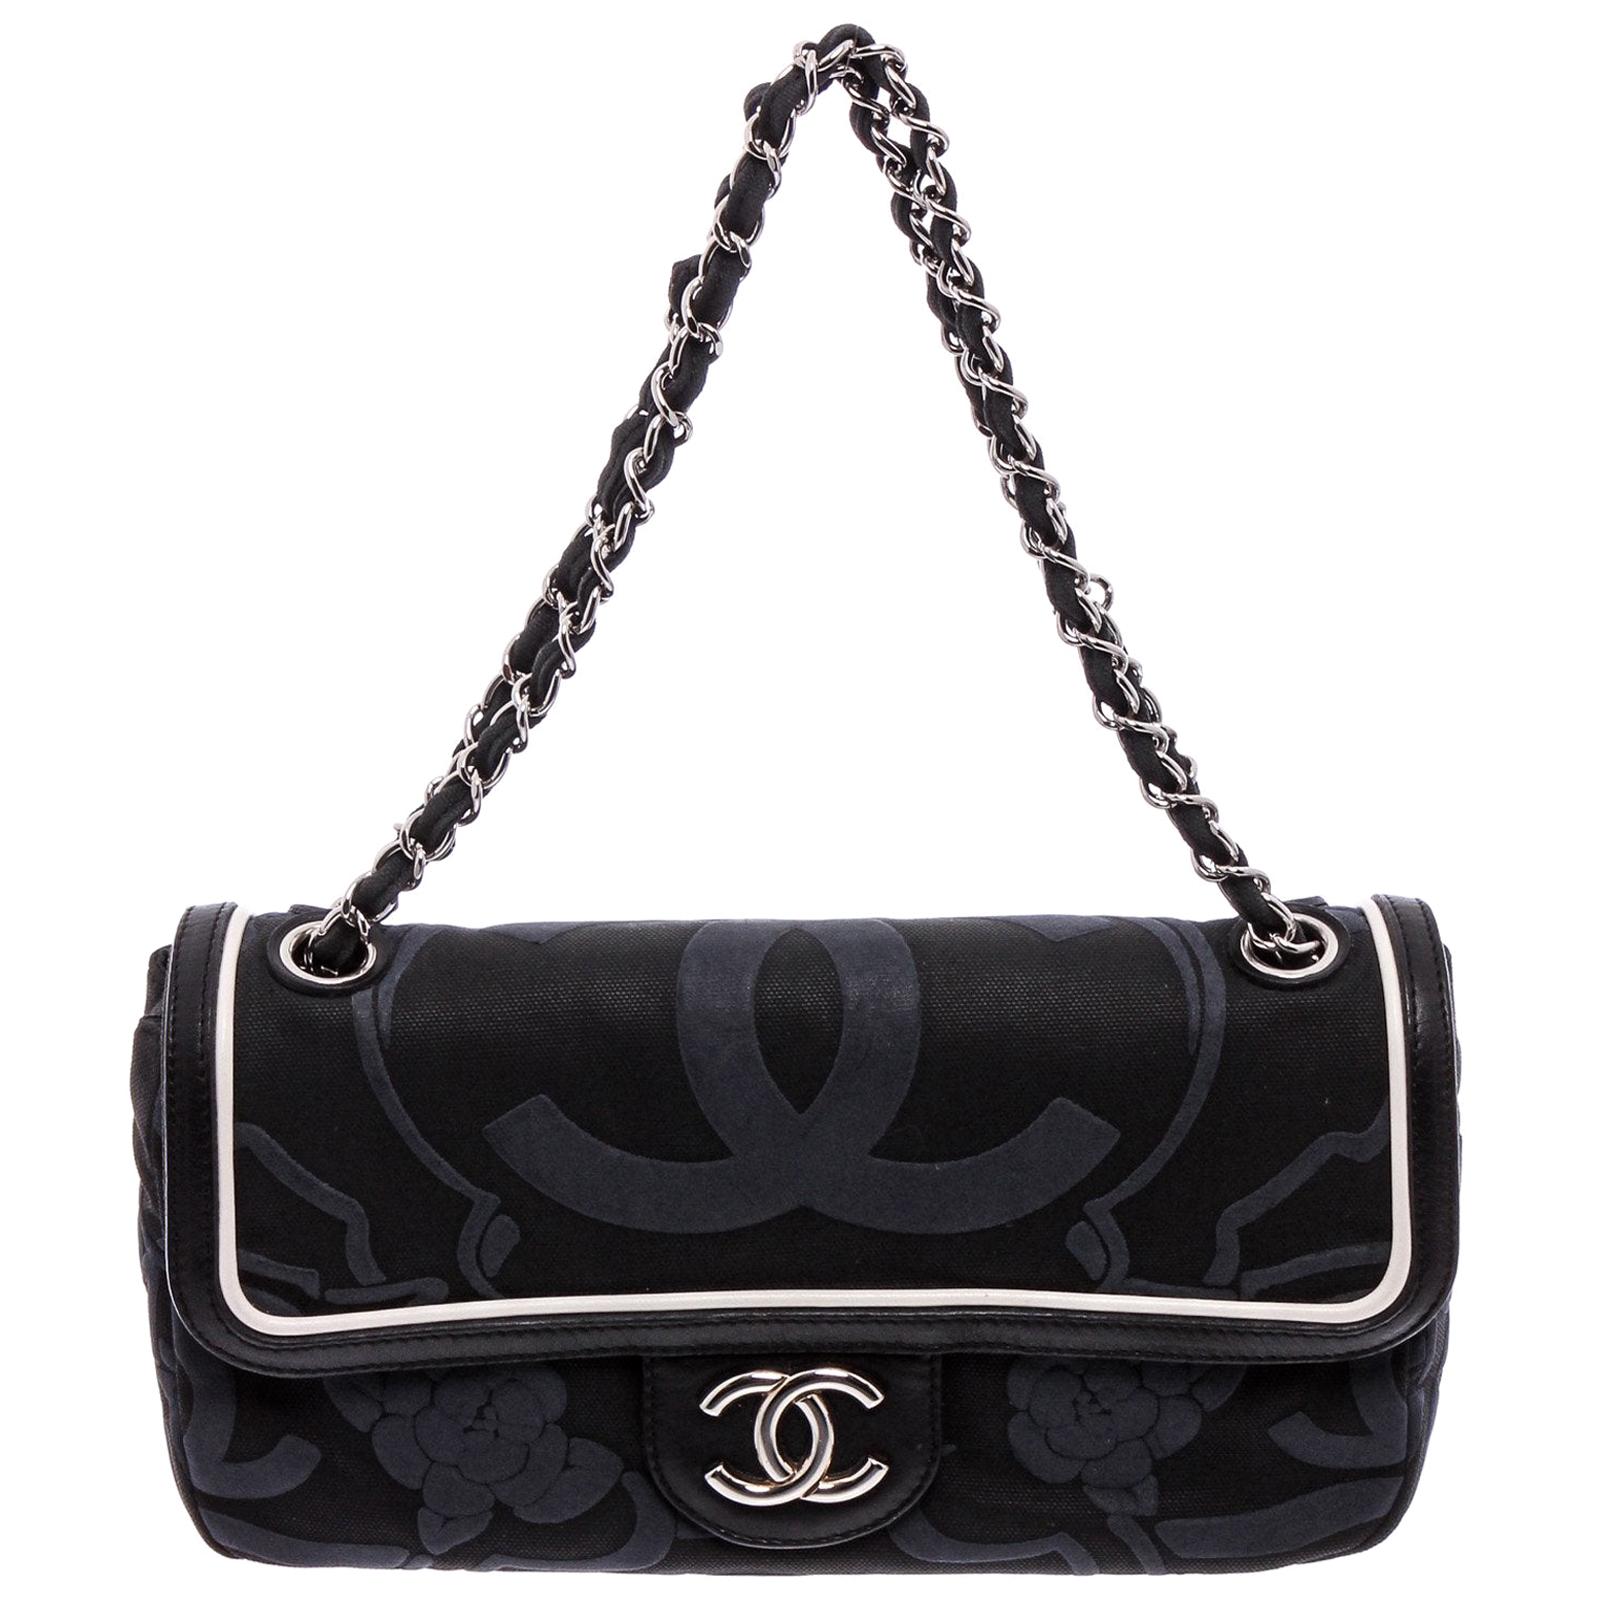 Chanel Black Canvas White Leather Trim Camellia Embossed Flap Shoulder Bag